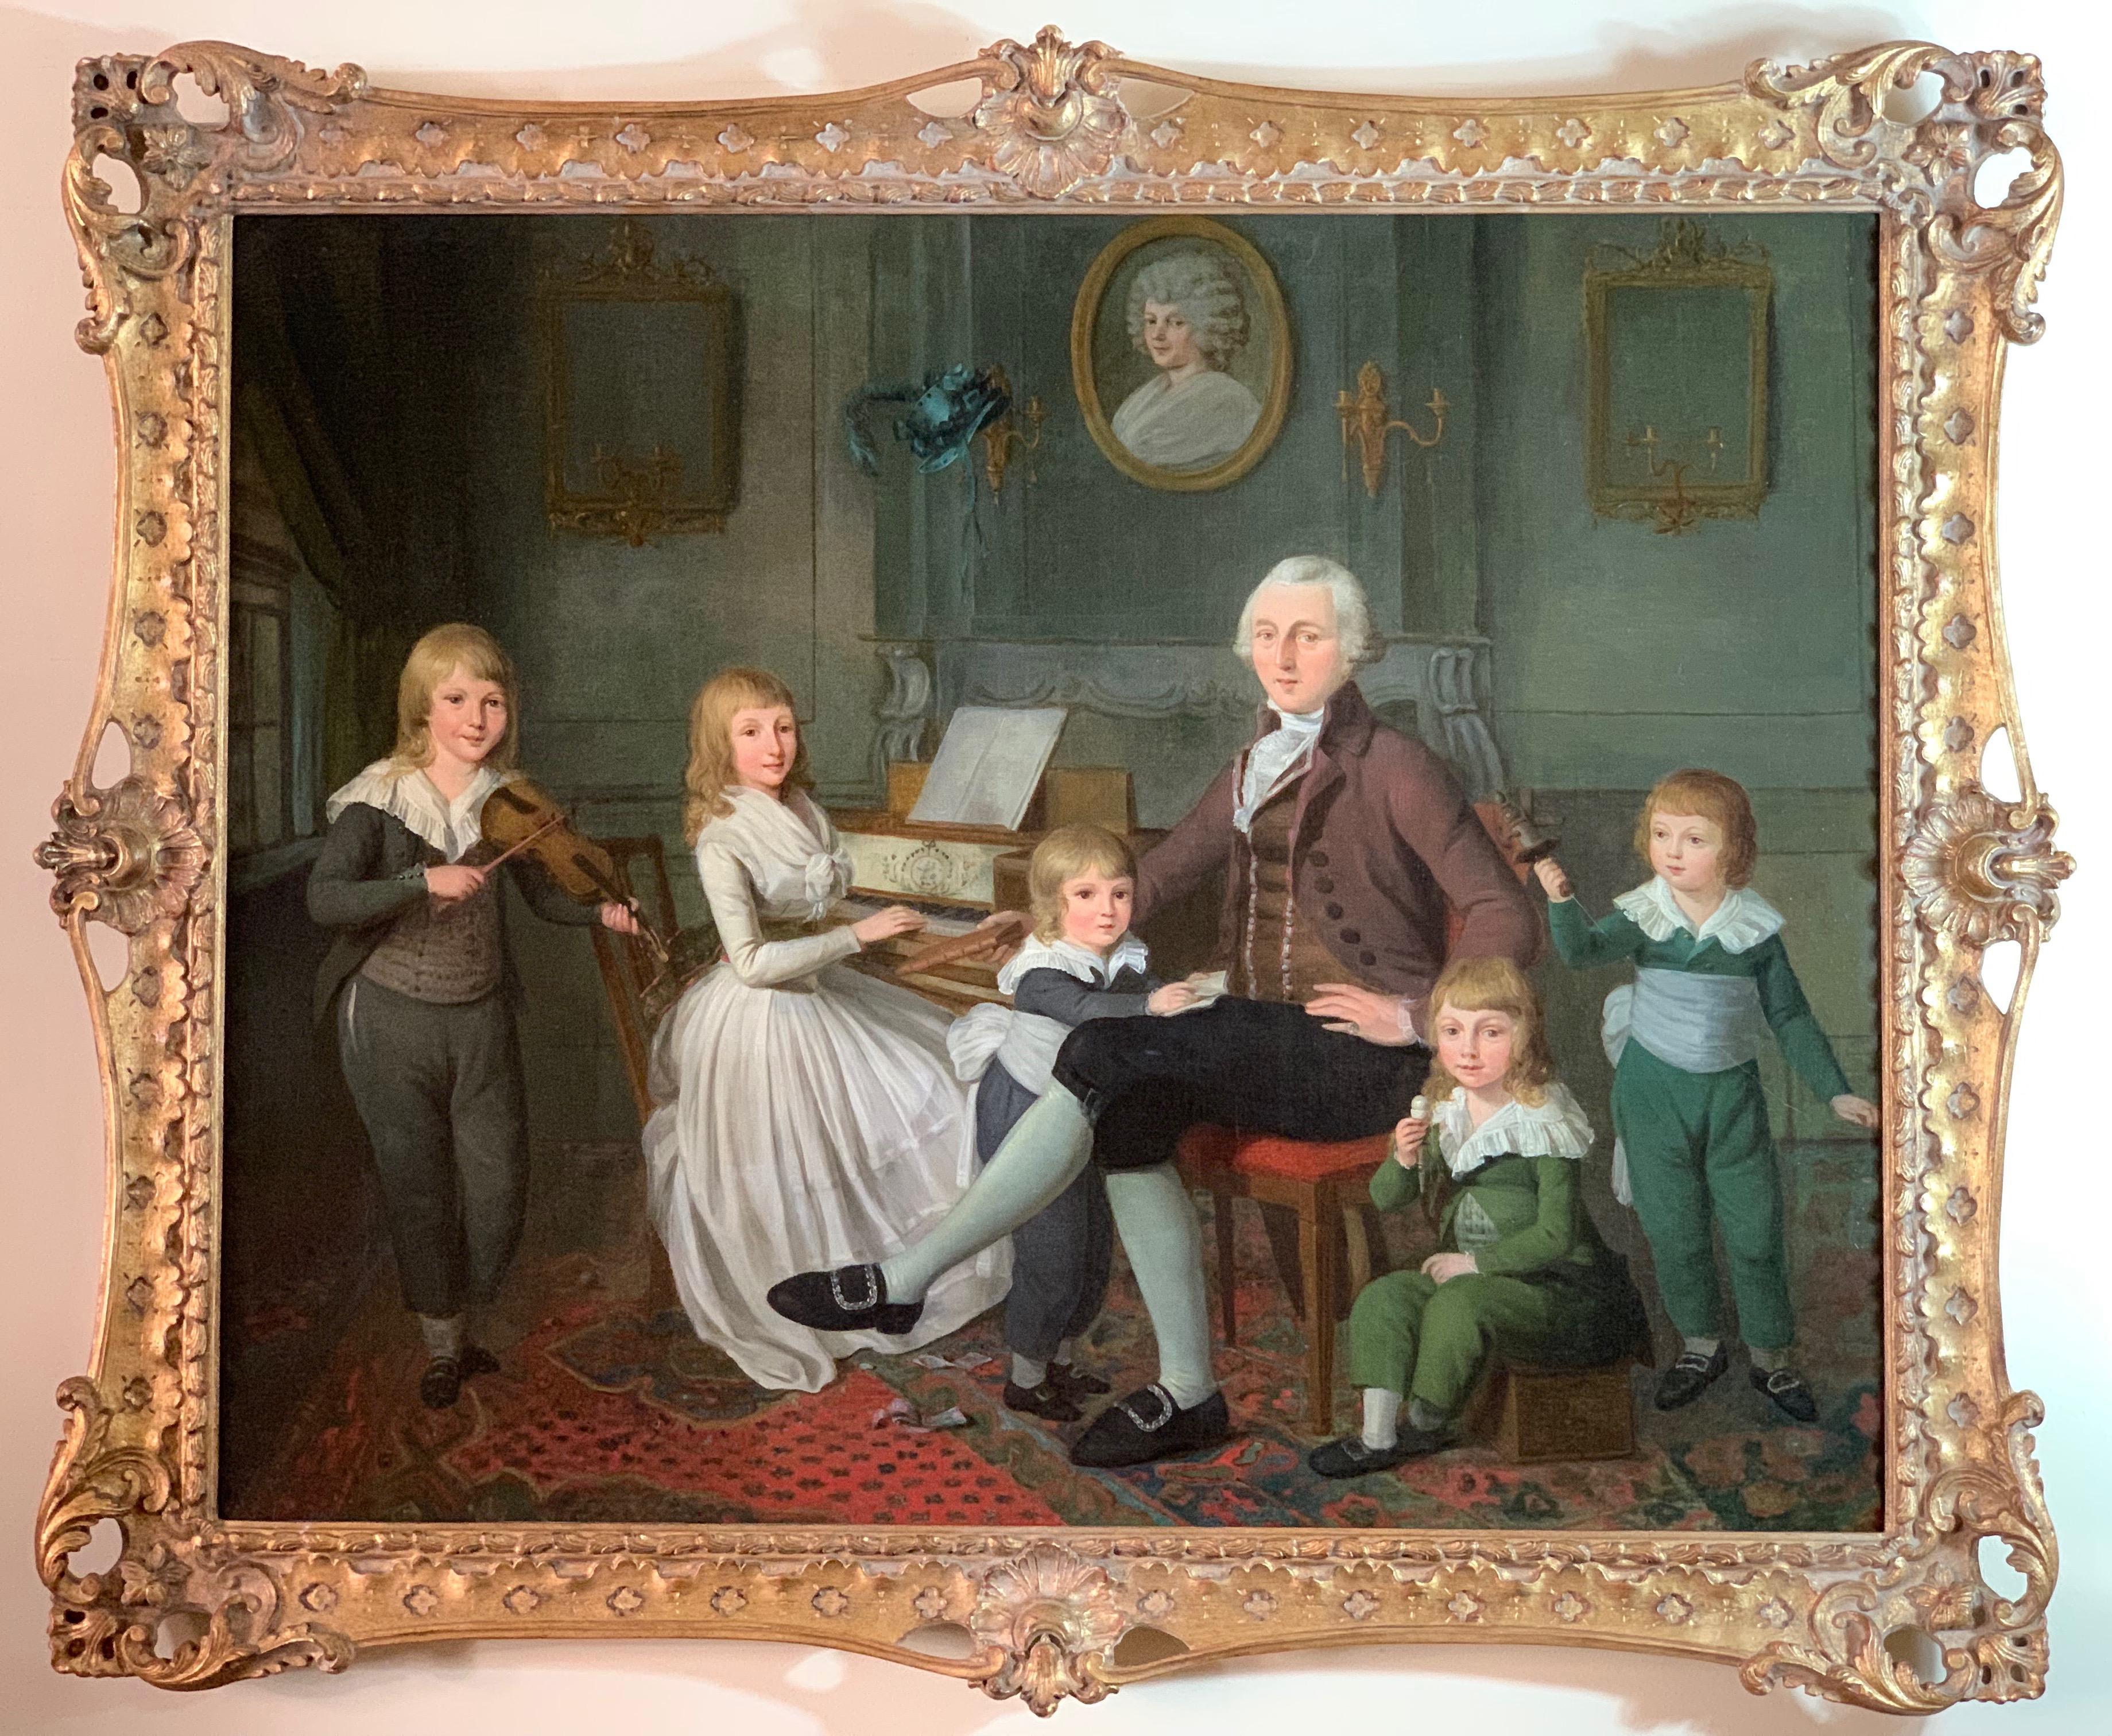 18th century family portraits